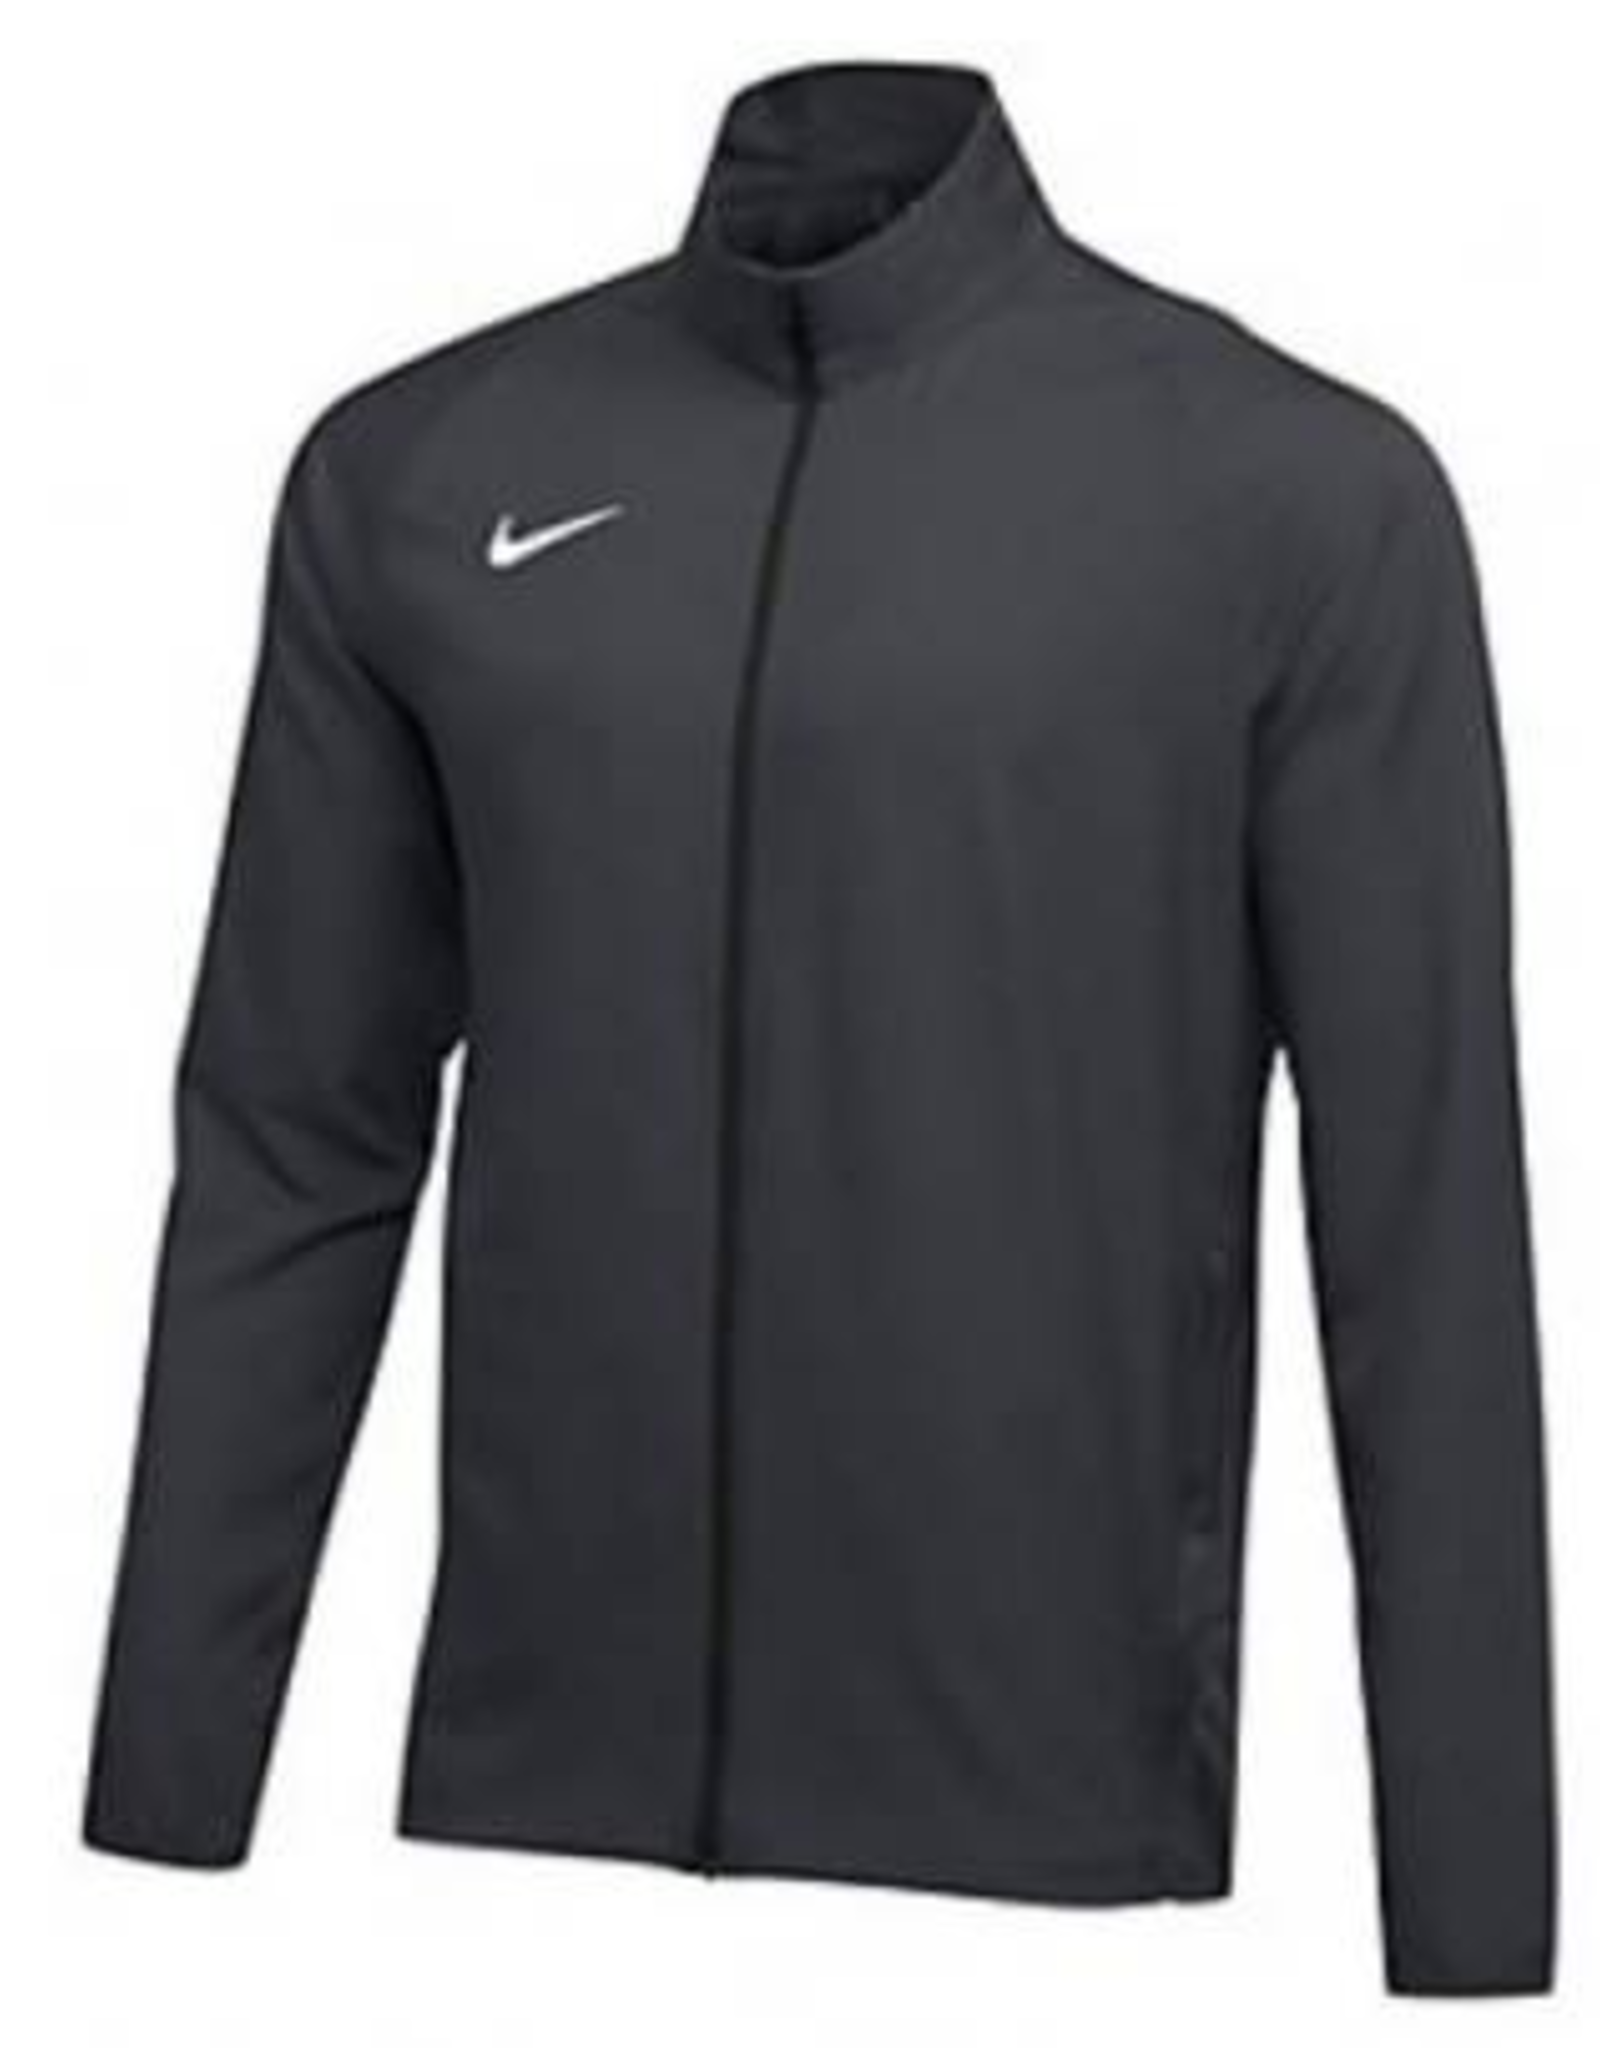 NON-UNIFORM Nike jacket, grey woven jacket, full zip, eagle on left chest